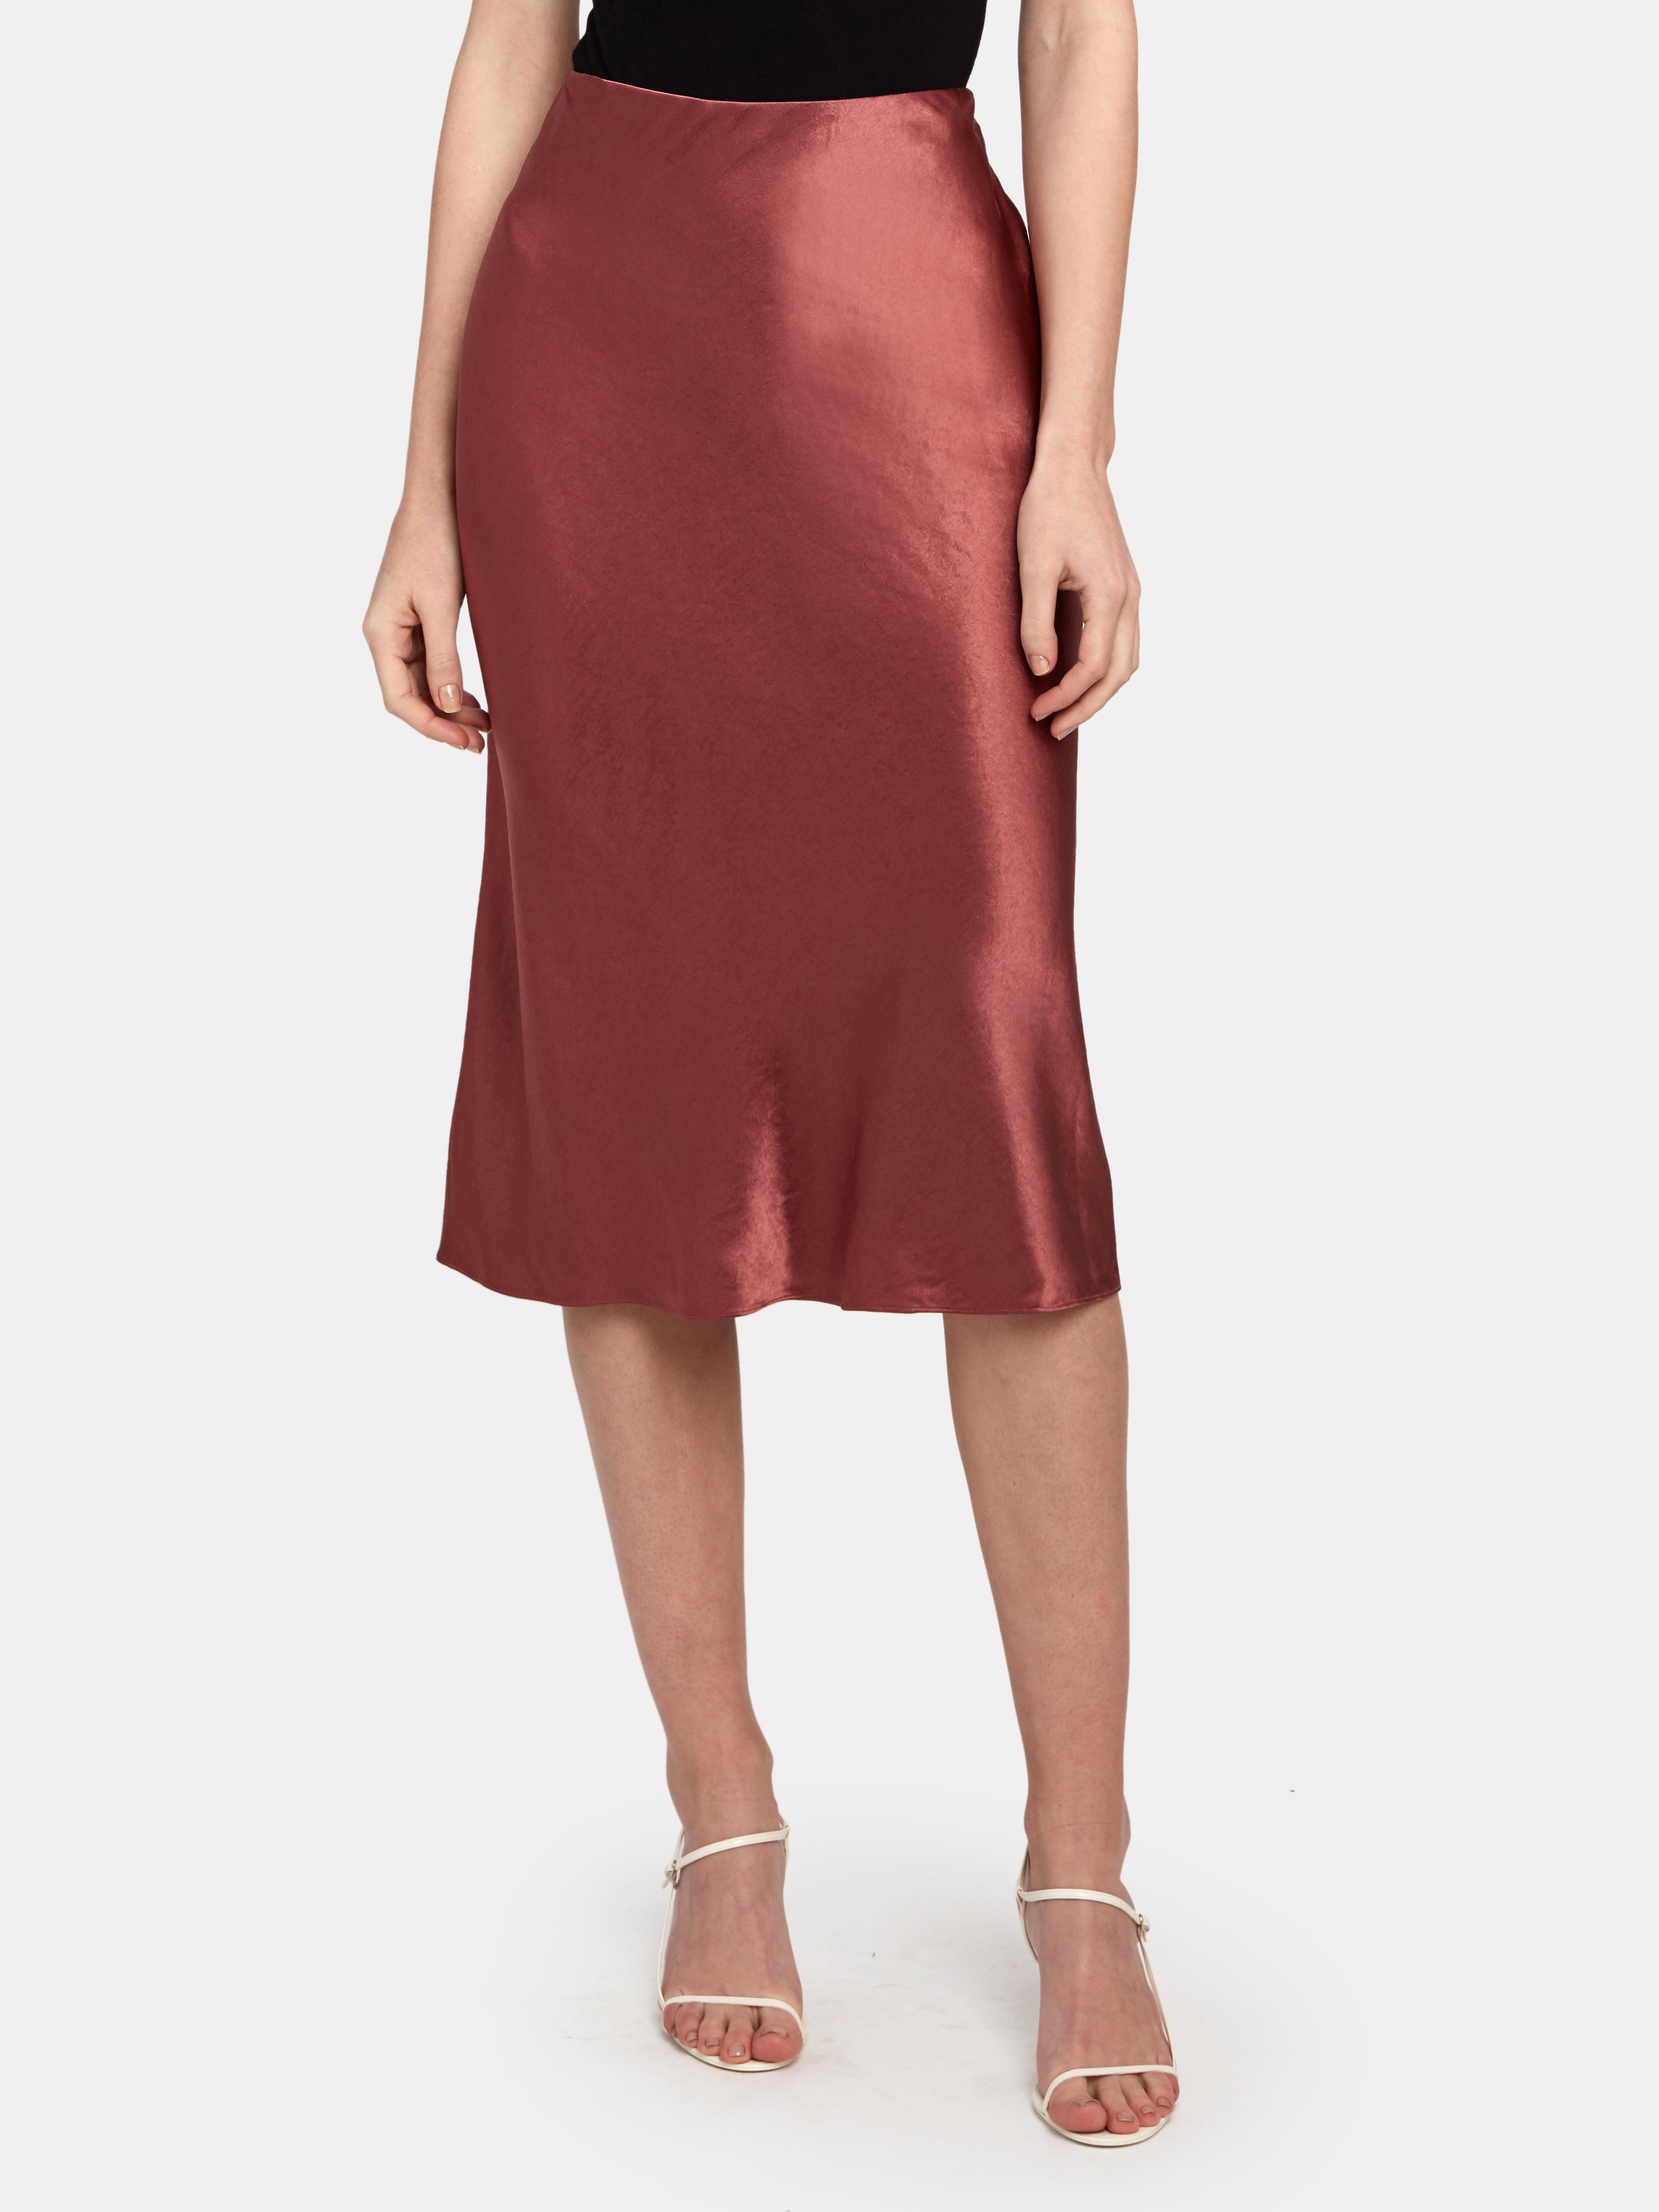 JIAZIV Womens A-Line Skirt High Waist Faux Leather Midi PU Skirt